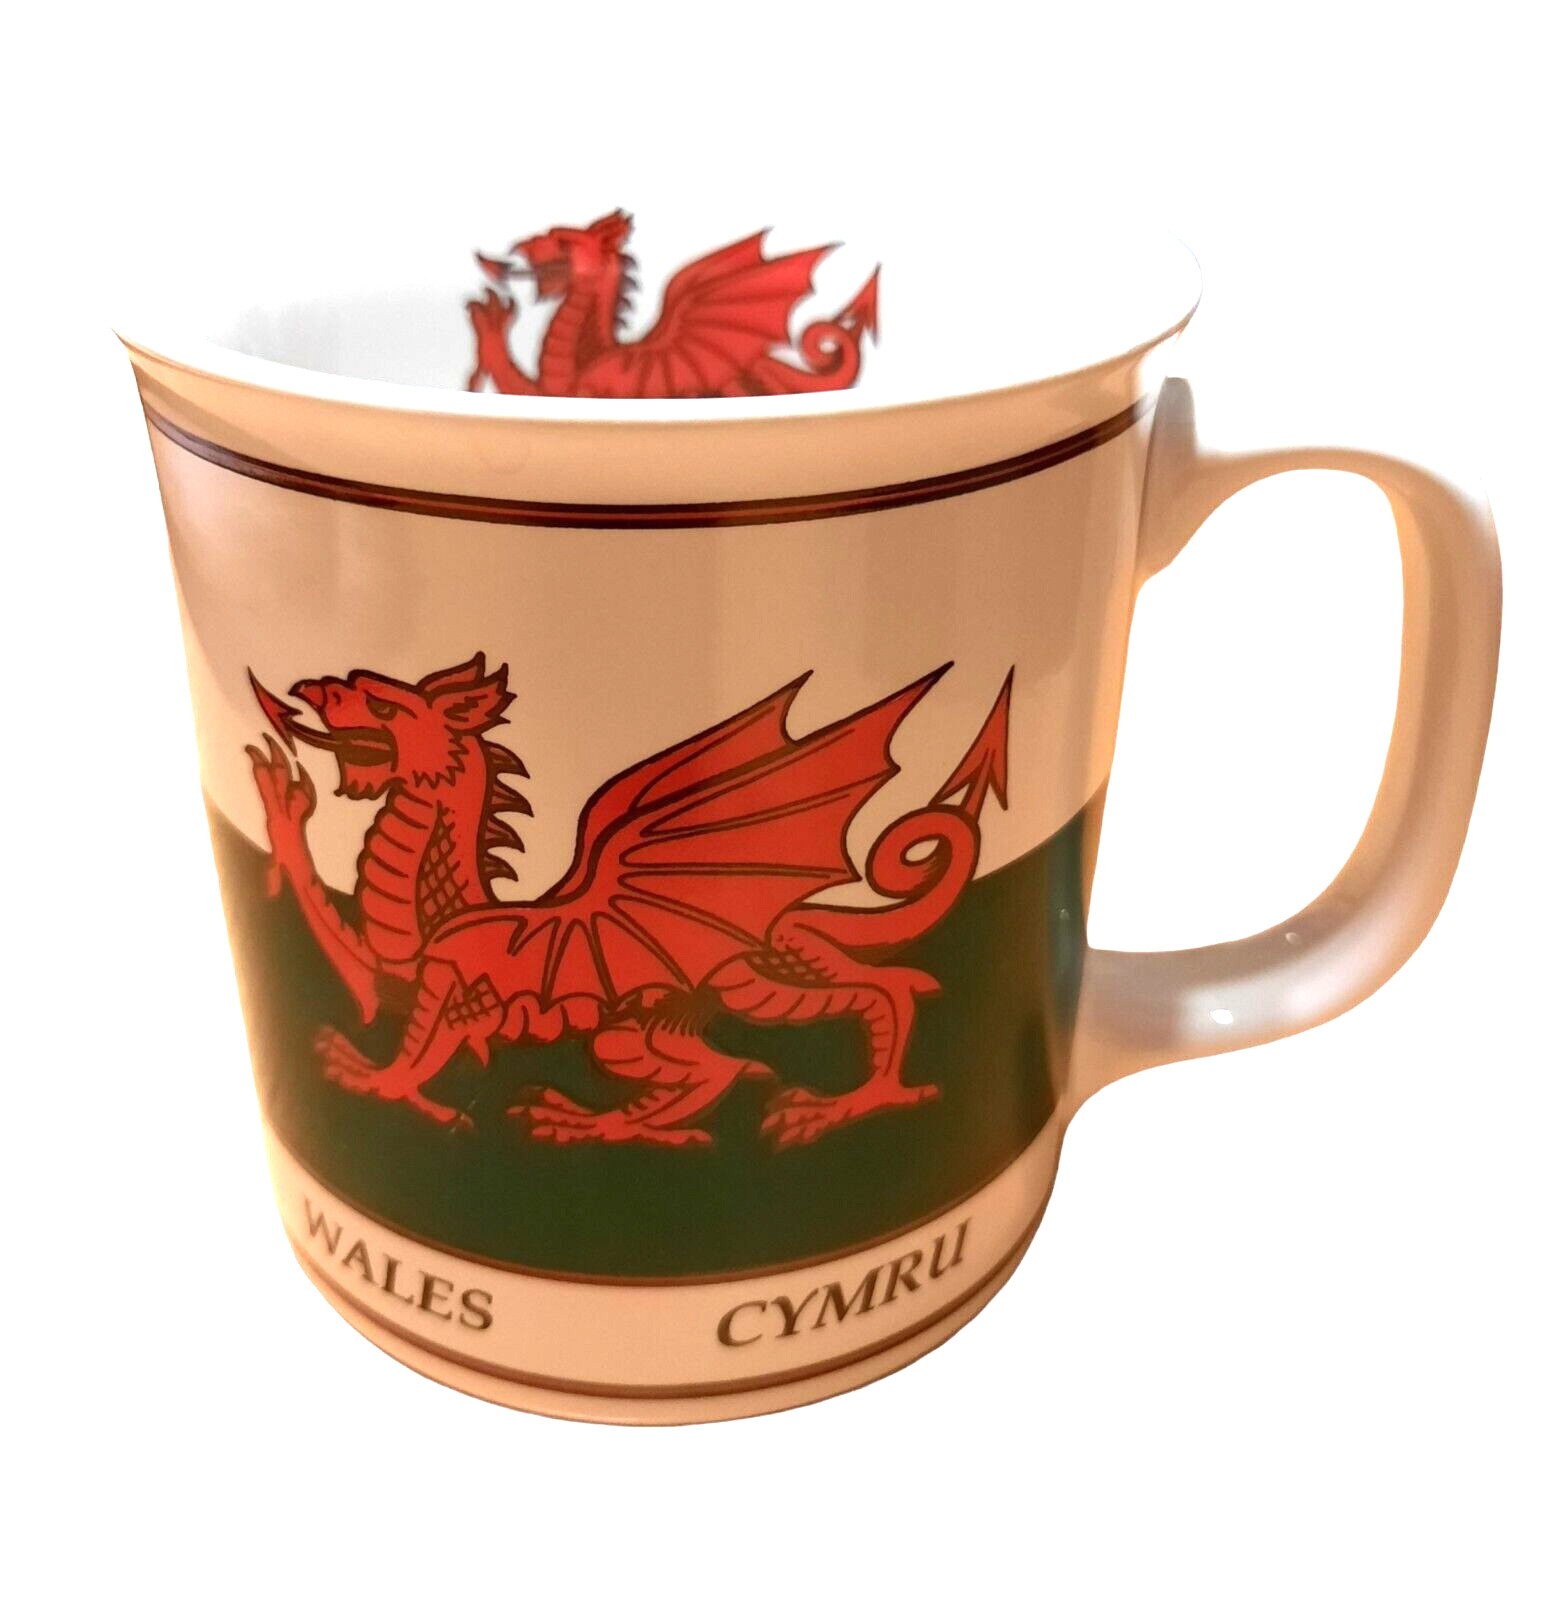 Wales DRAGON Cymru Coffee Mug CELTIC Mythology Norse Great Red Serpent Chocolate